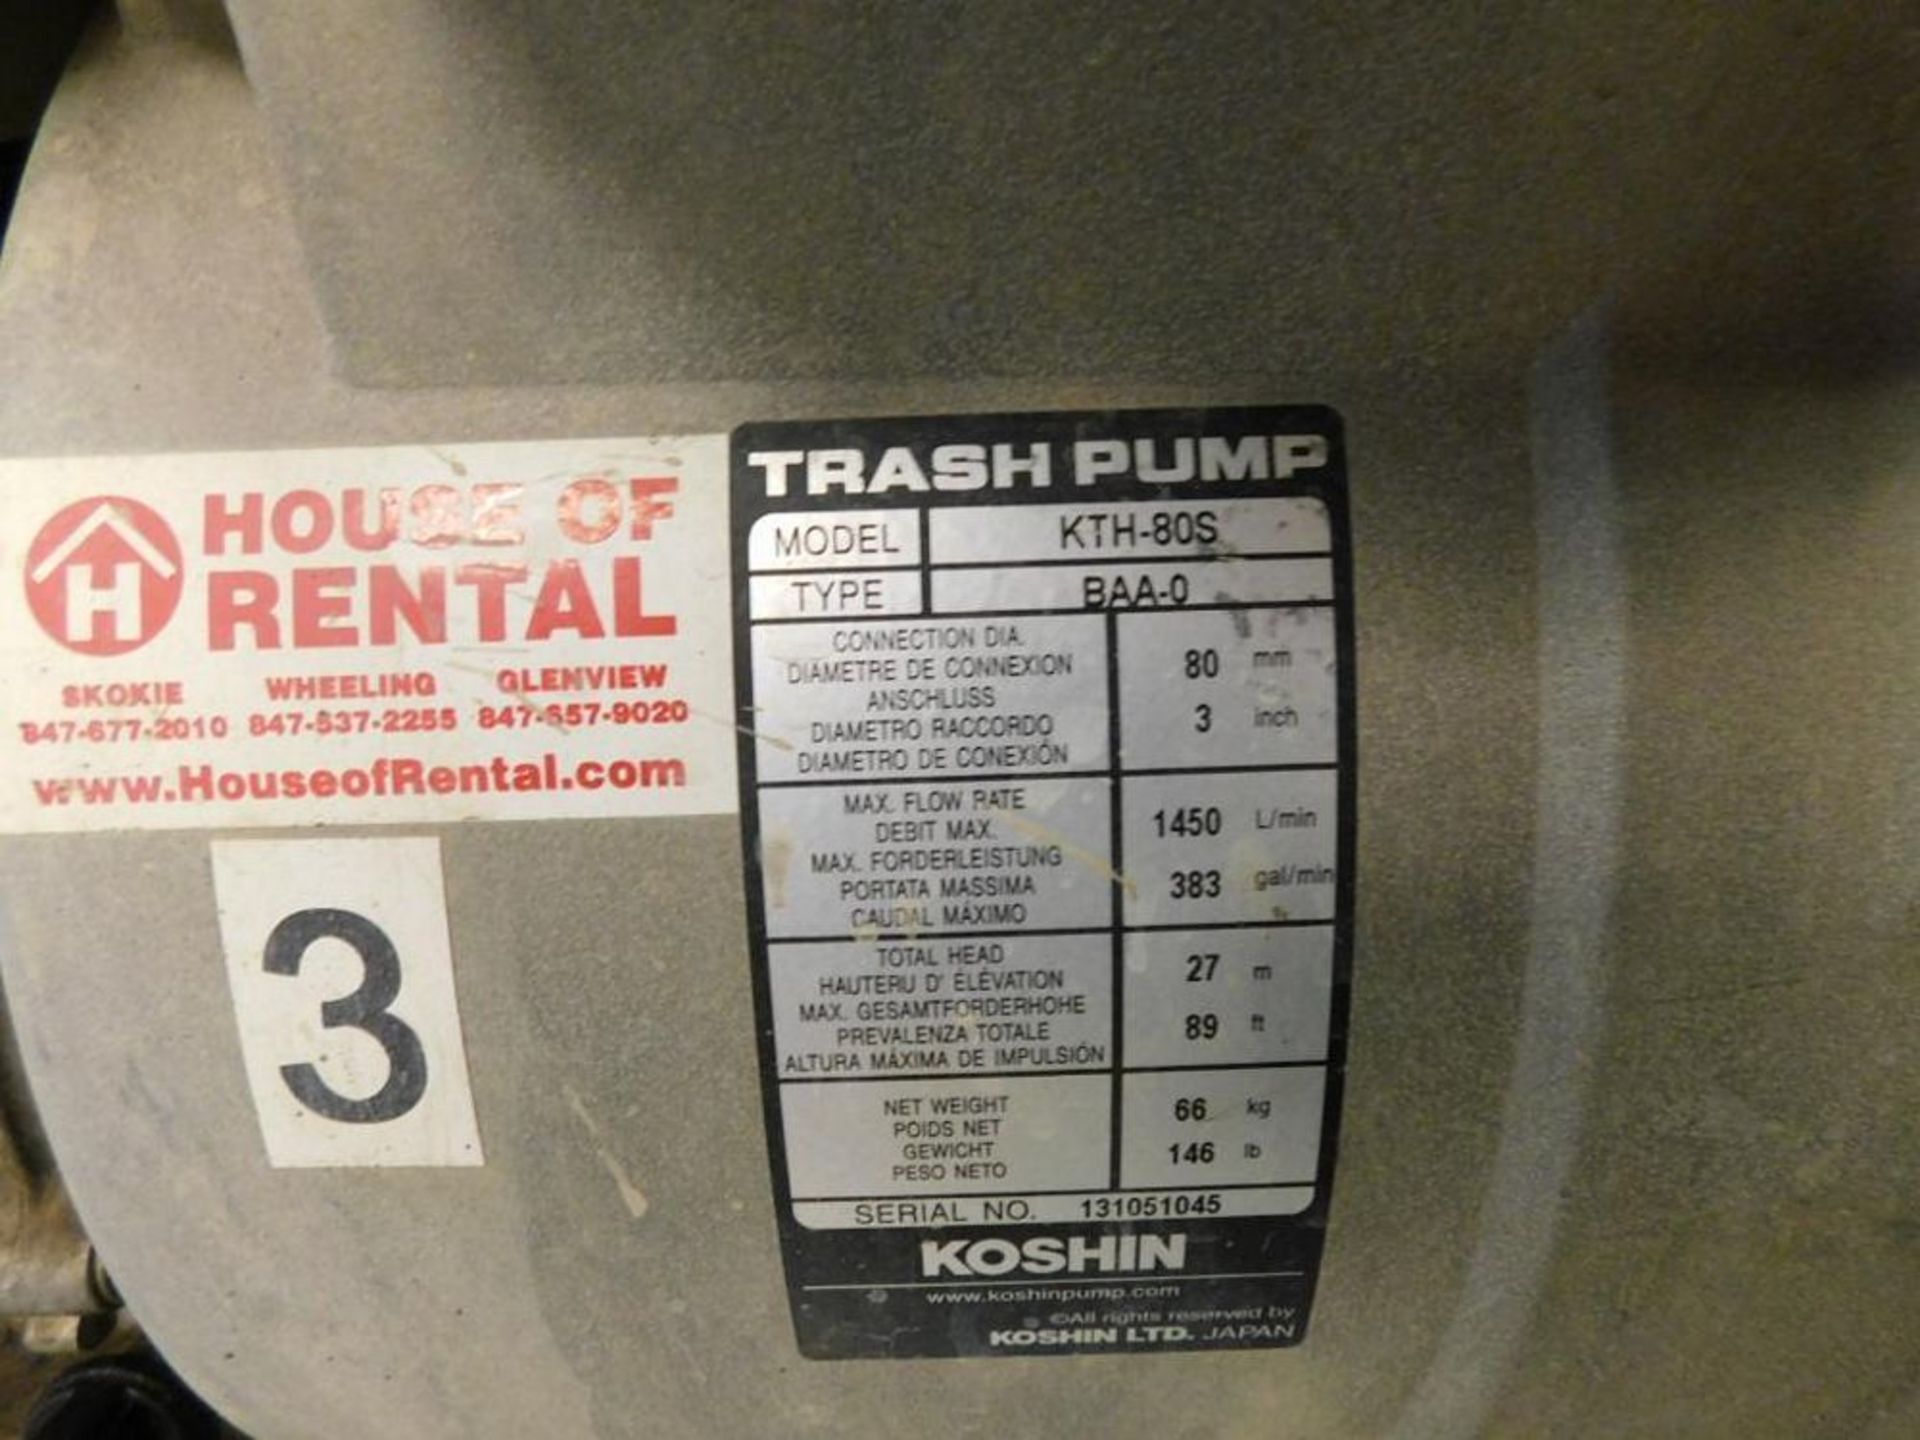 Koshin KTH-80S Gas 3" Trash Pump w/Honda GX270 Motor, 383 gpm (LOCATION: 318 N. Milwaukee Ave., - Image 4 of 4